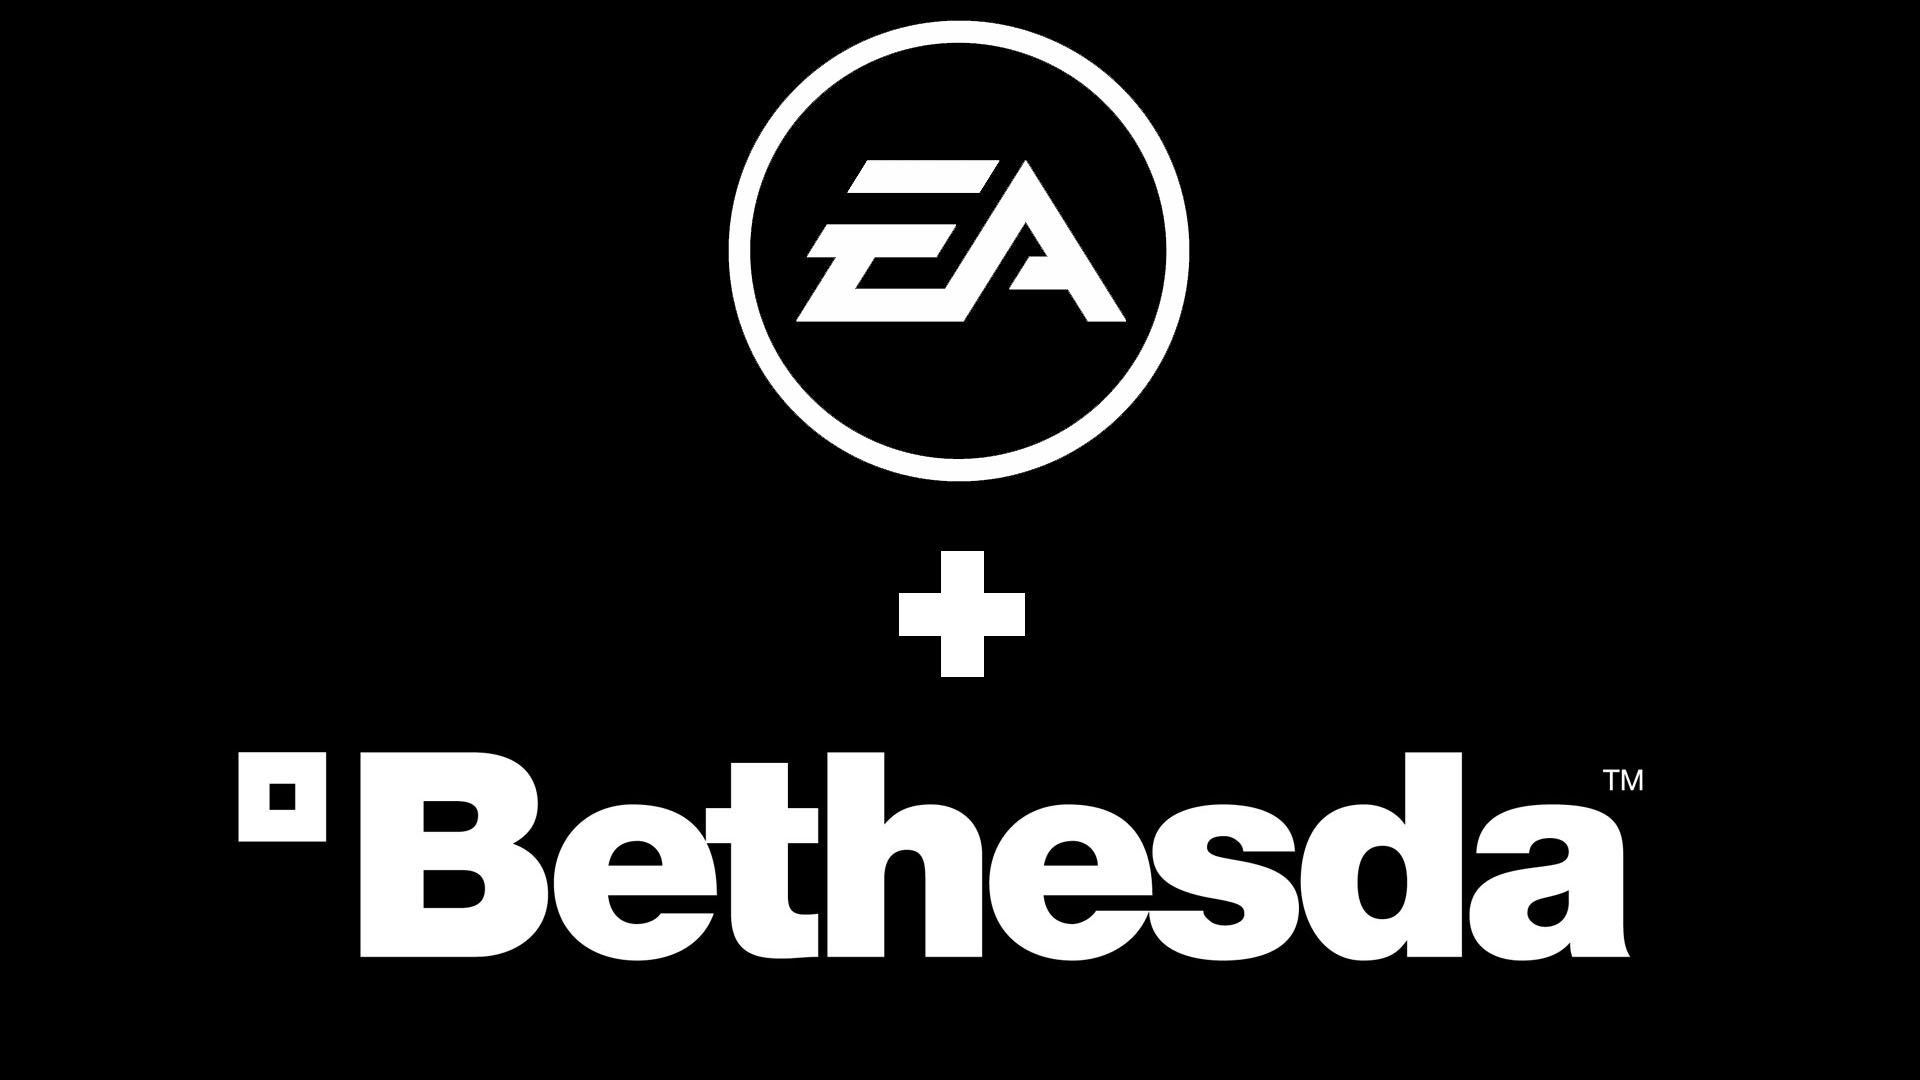 EA and Bethesda